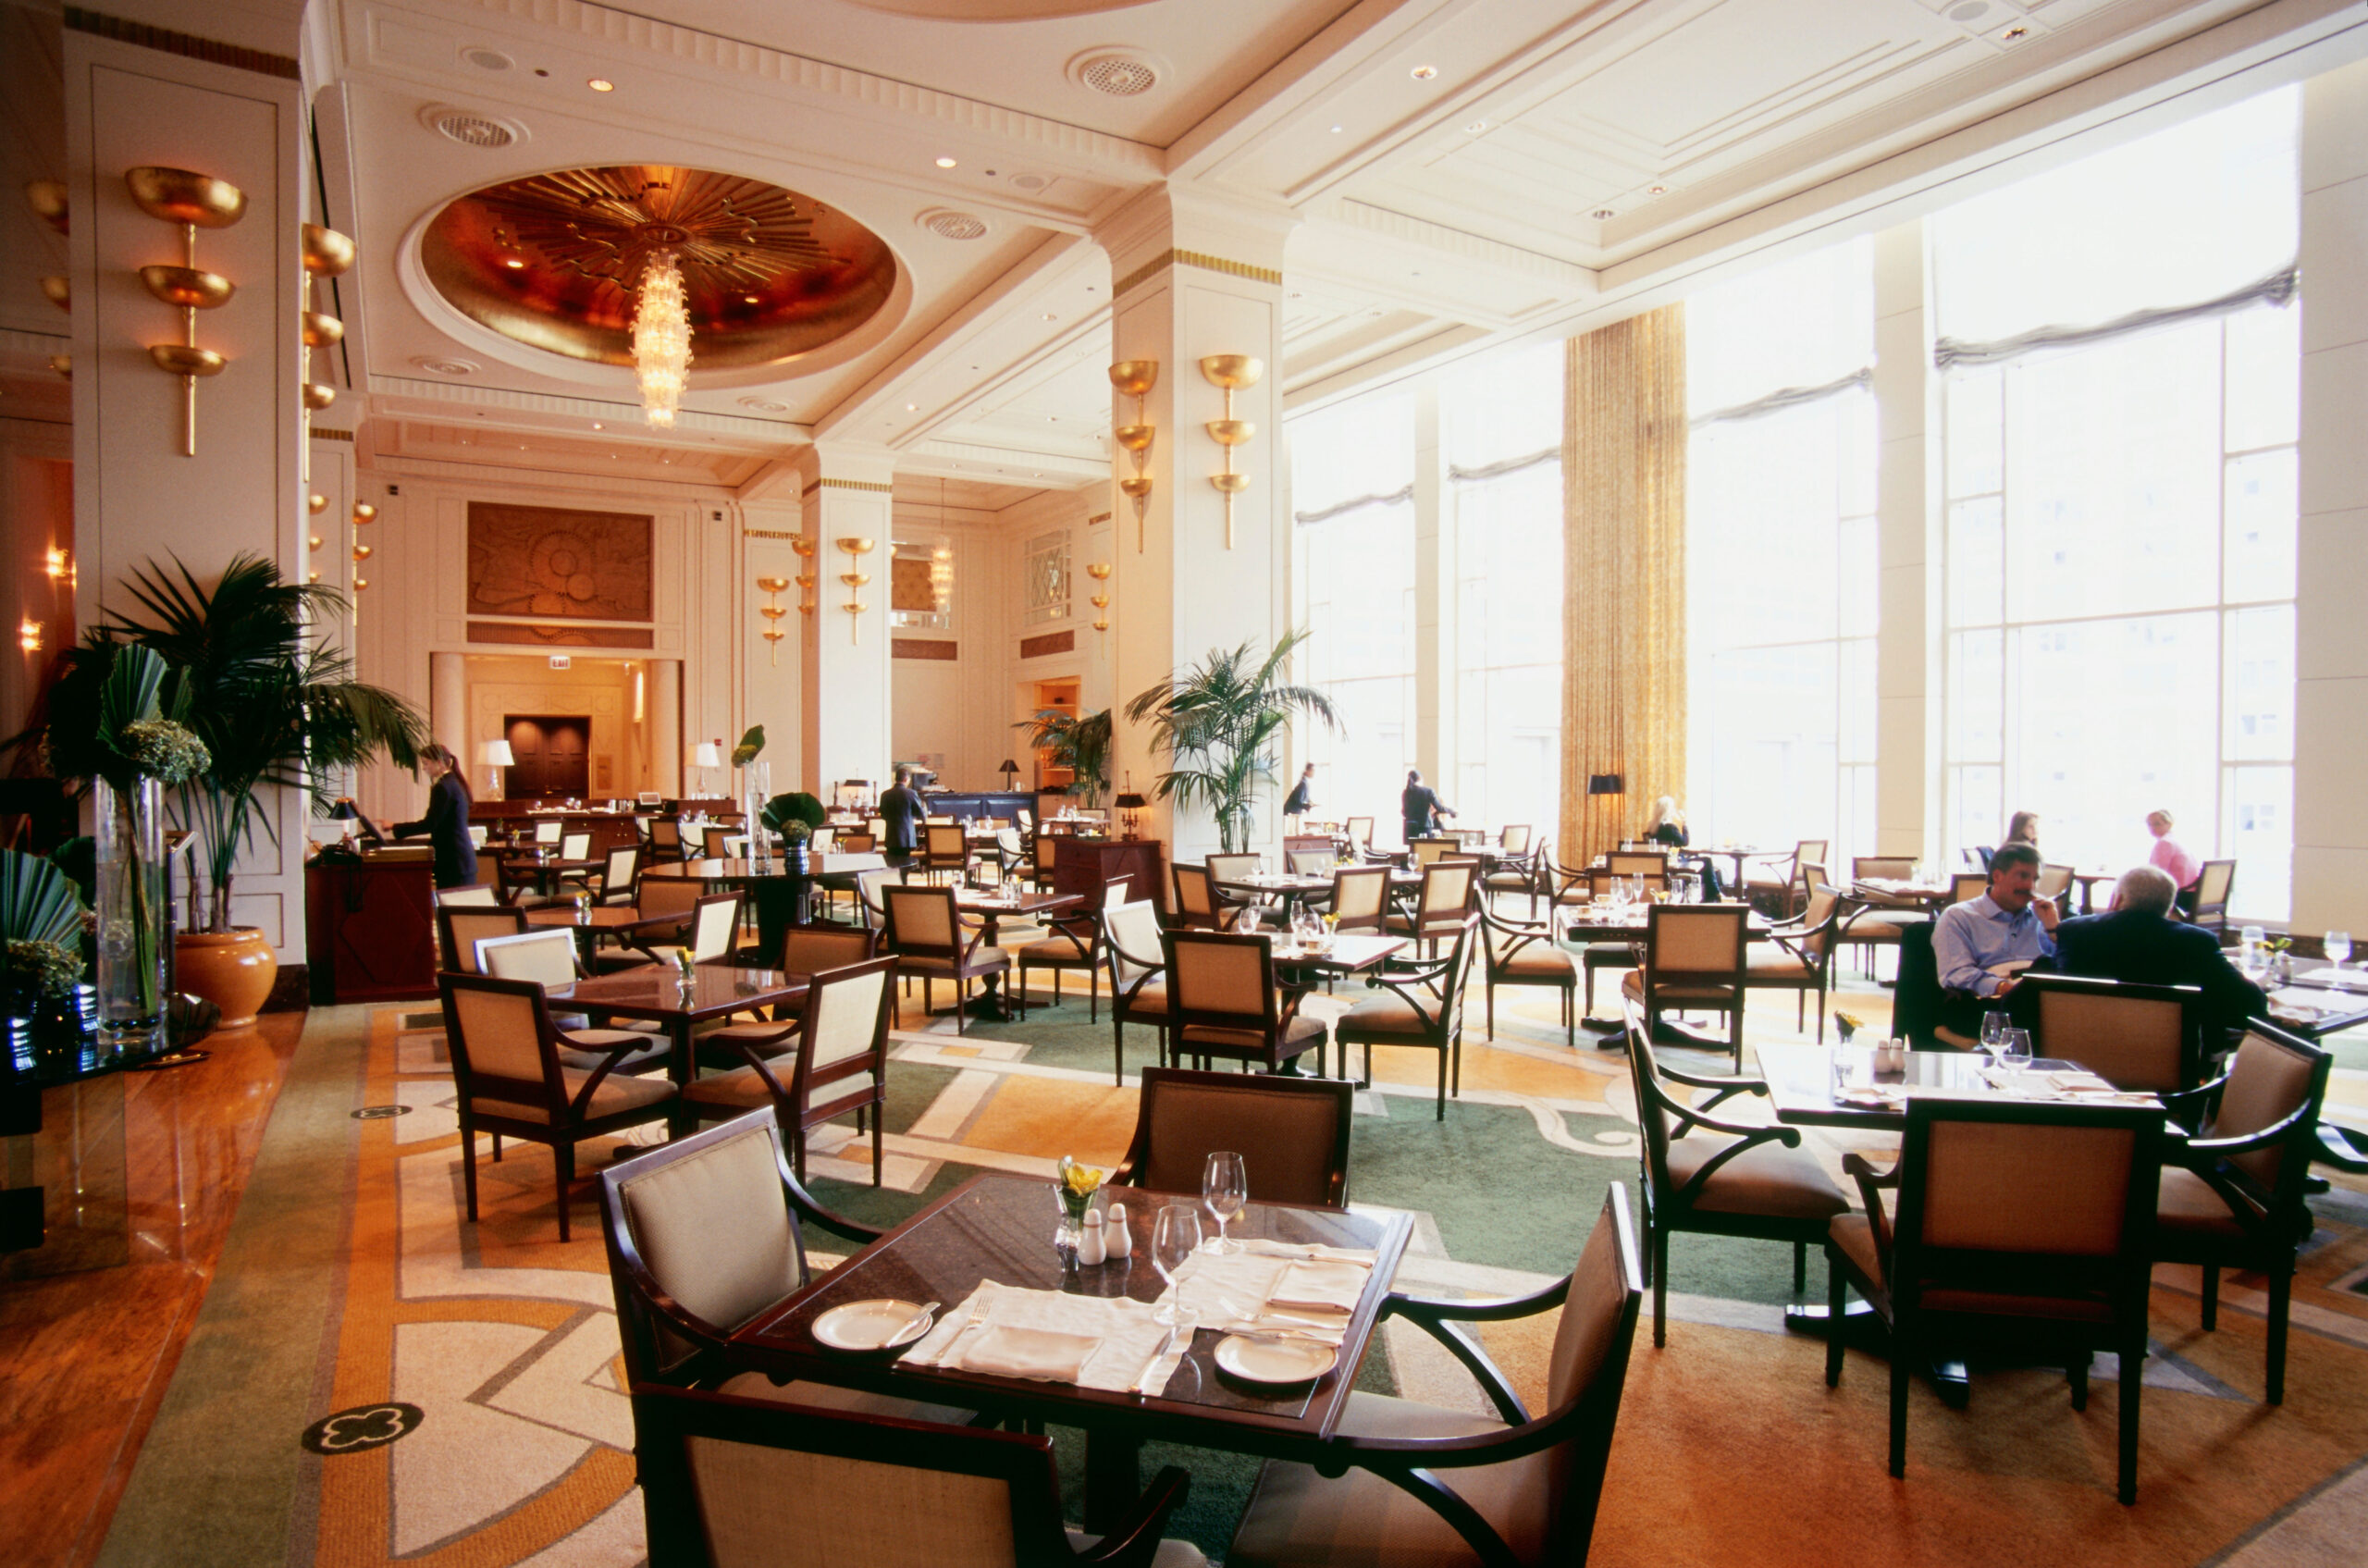 Dining area at lobby of Hotel Peninsula, Chicago, Illinois, USA